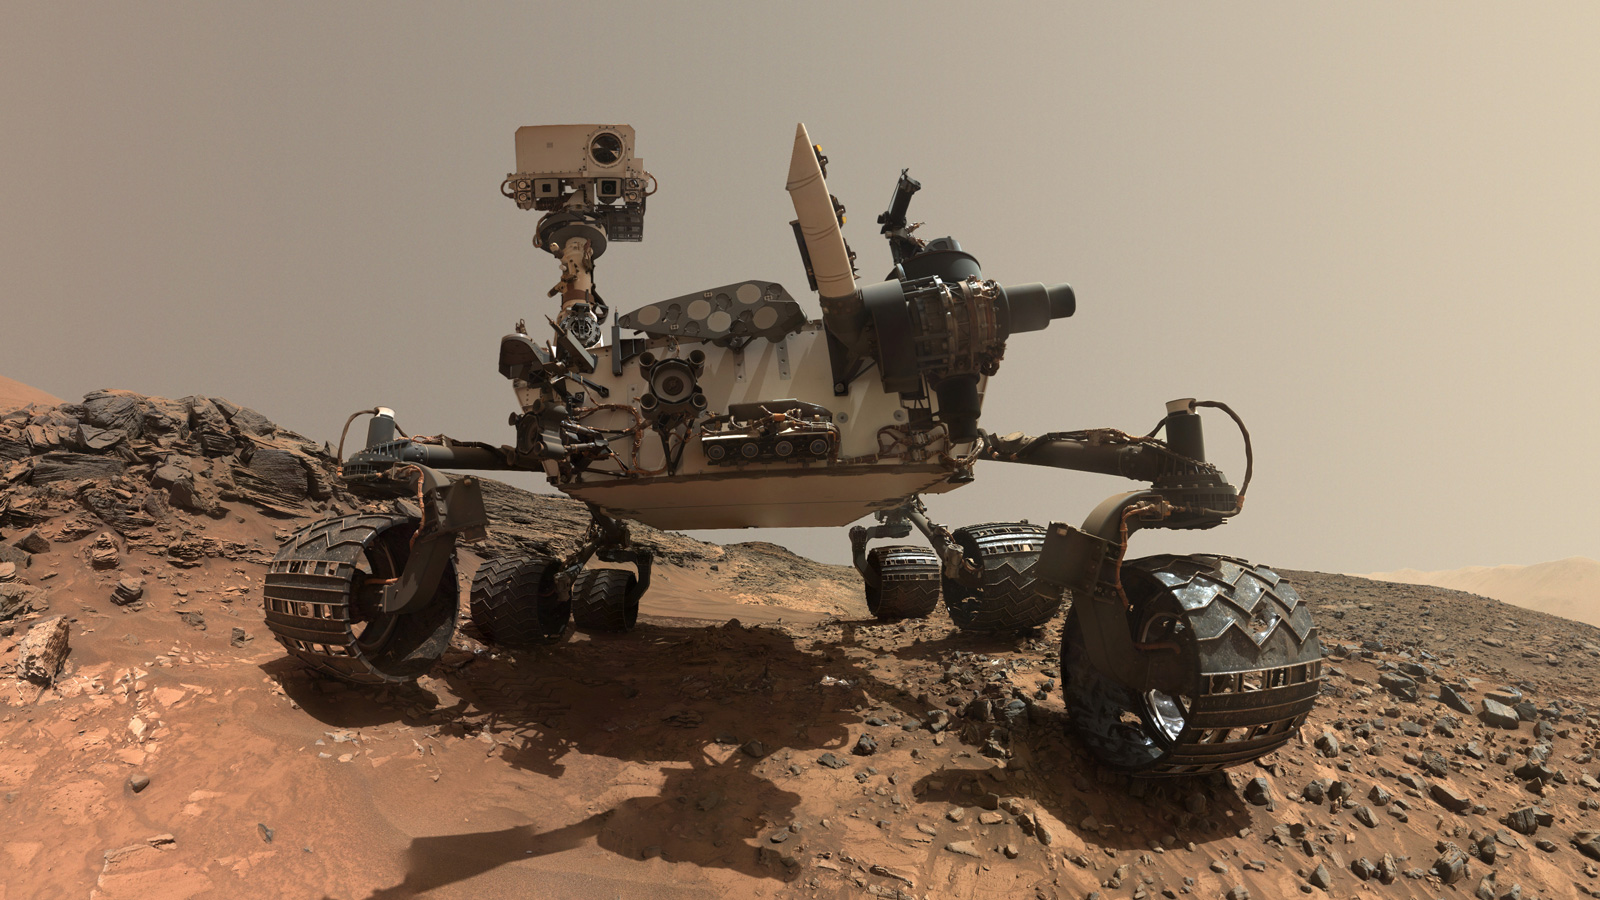 slide 1 - Mars Curiosity Rover